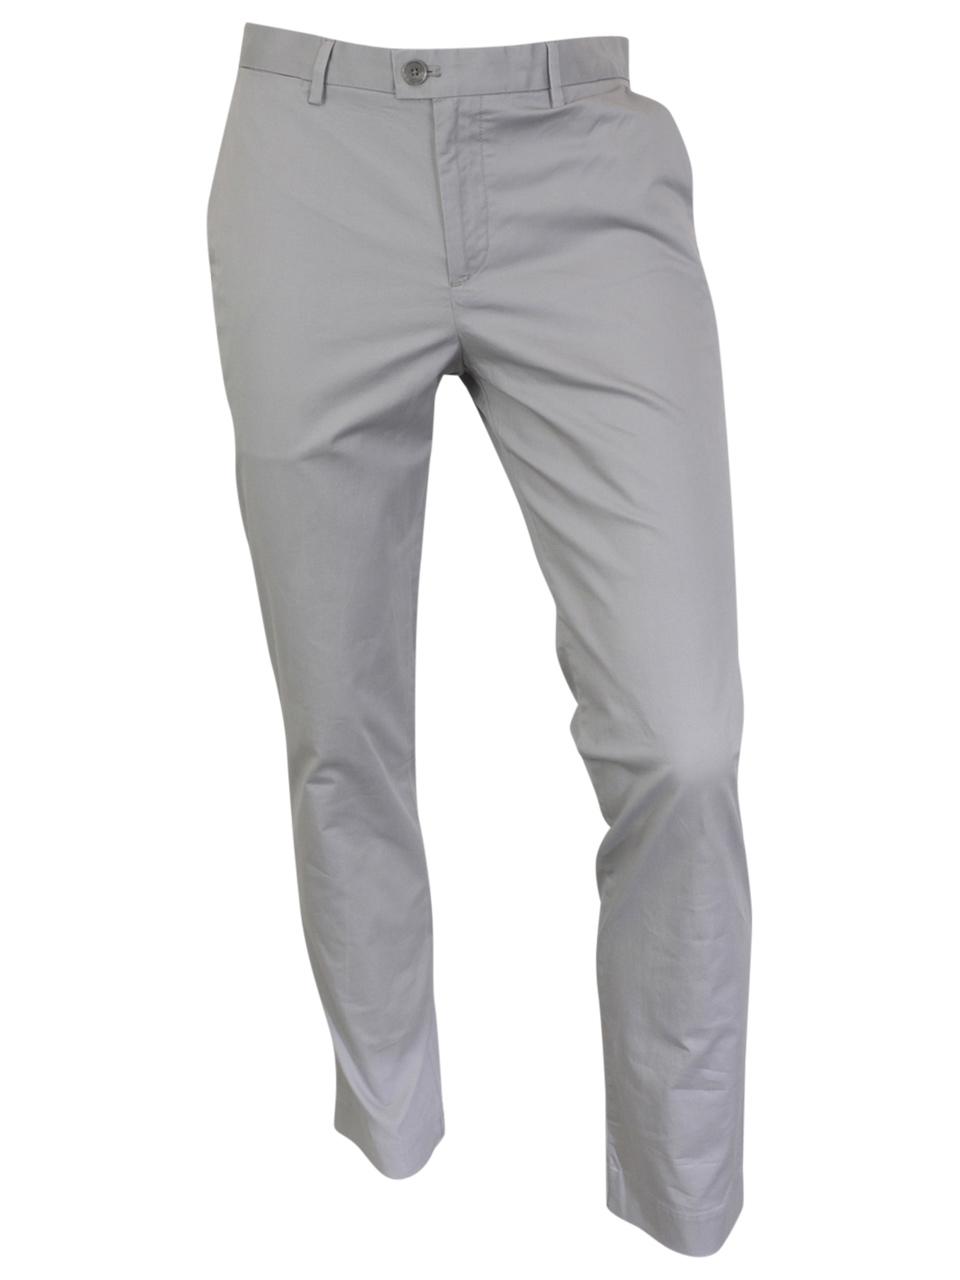 Calvin Klein Men\'s Solid Pants Slim Stretch | eBay Fit Chino